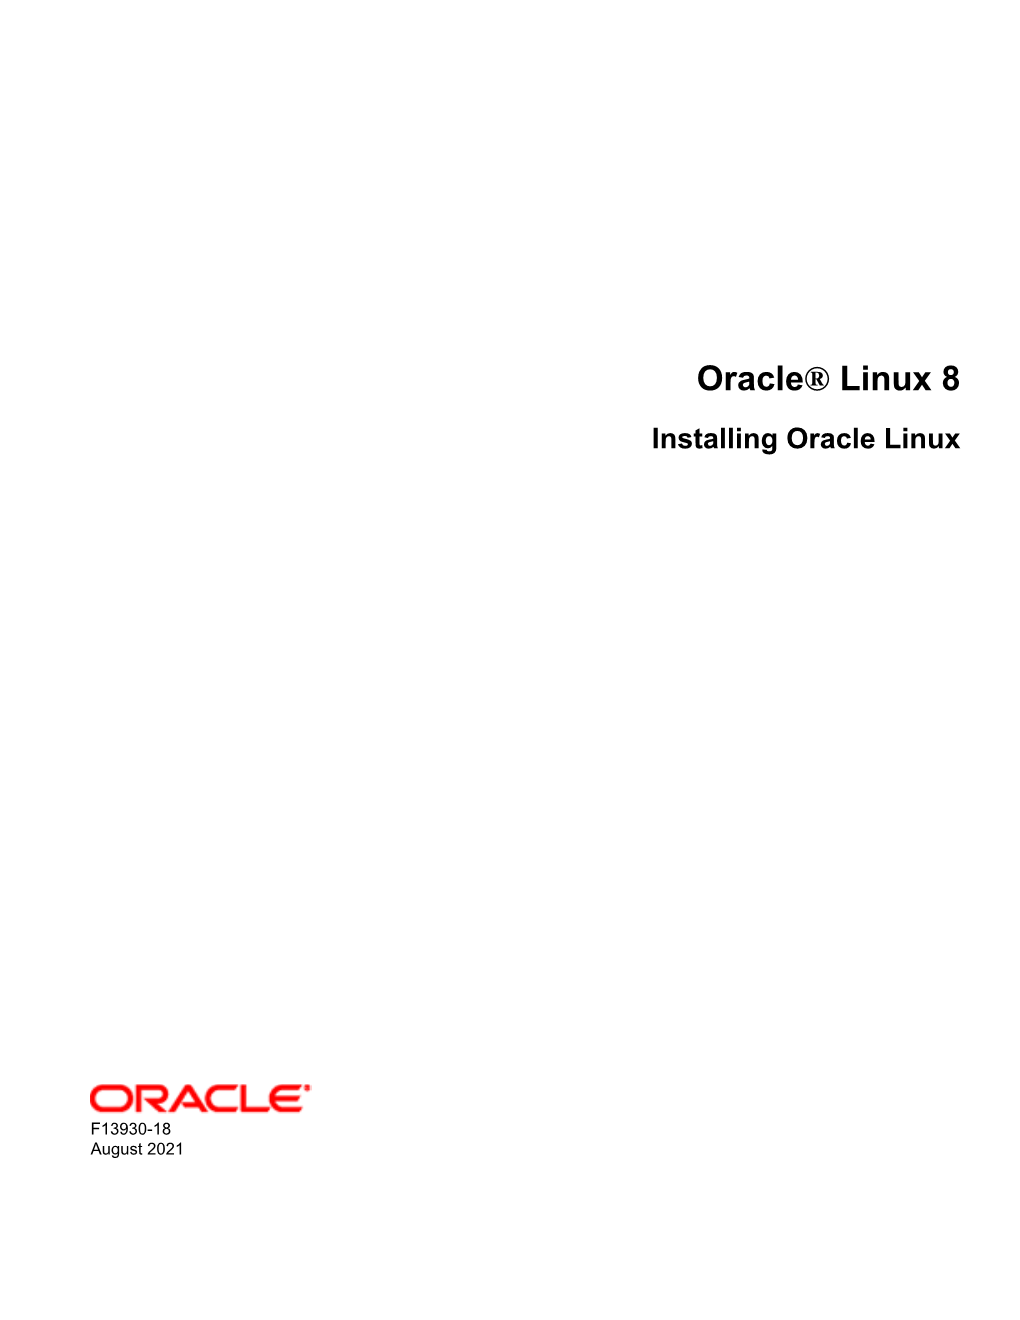 Oracle® Linux 8 Installing Oracle Linux